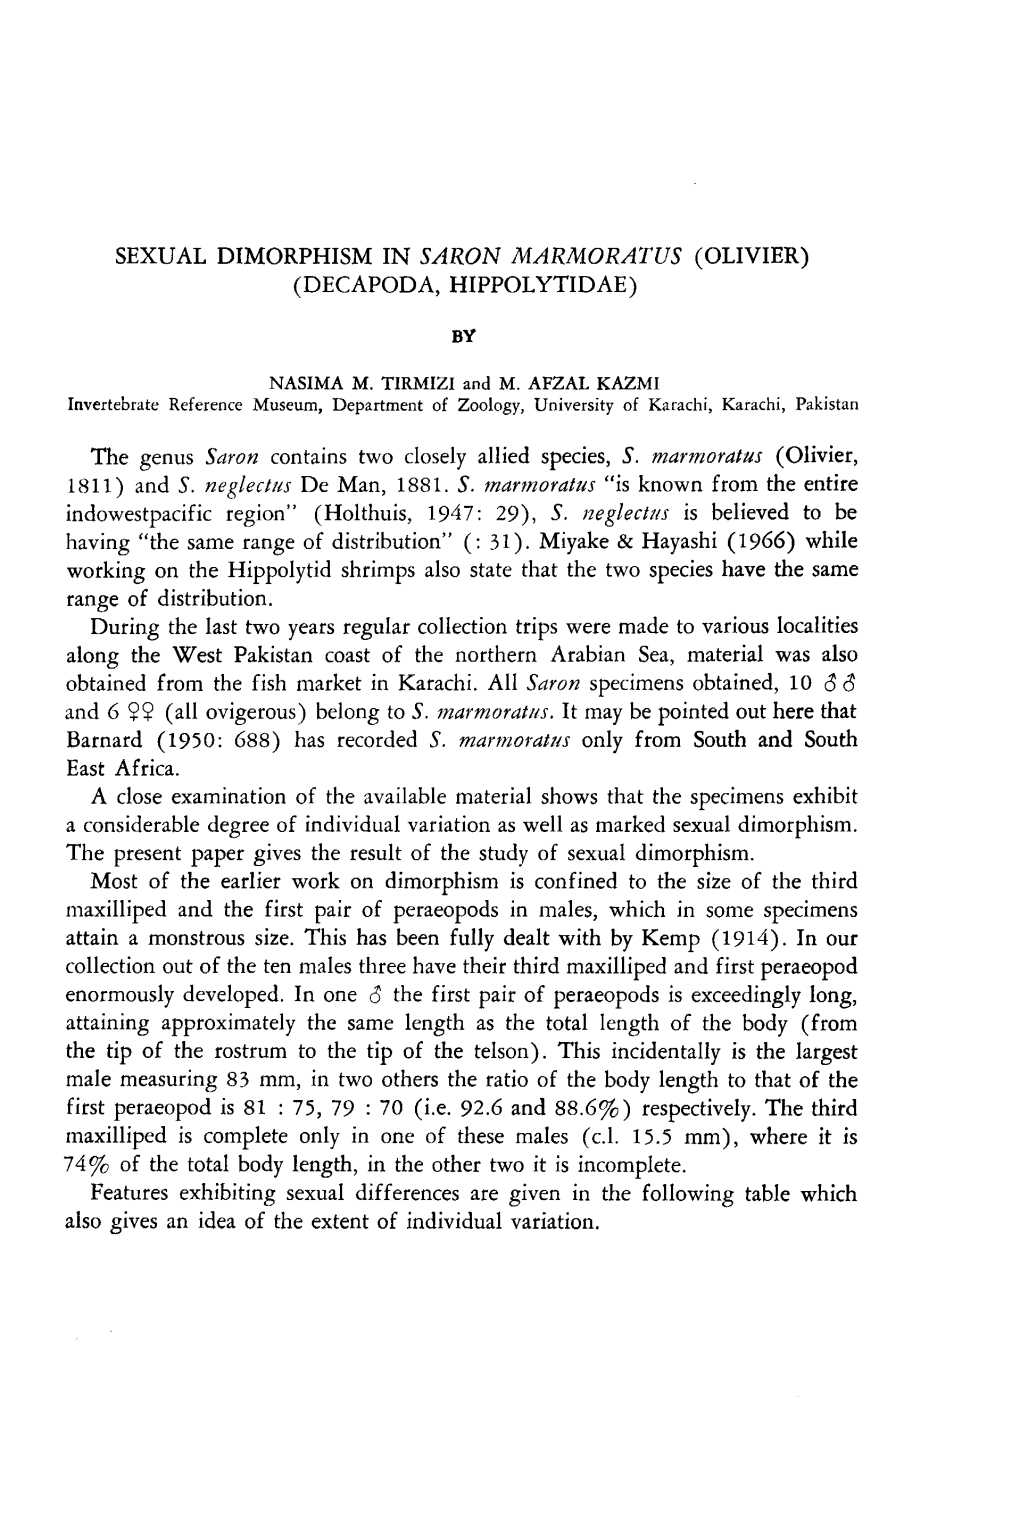 SEXUAL DIMORPHISM in SARON MARMORATUS (OLIVIER) (DECAPODA, HIPPOLYTIDAE) by NASIMA M. TIRMIZI and M. AFZAL KAZMI Invertebrate Re